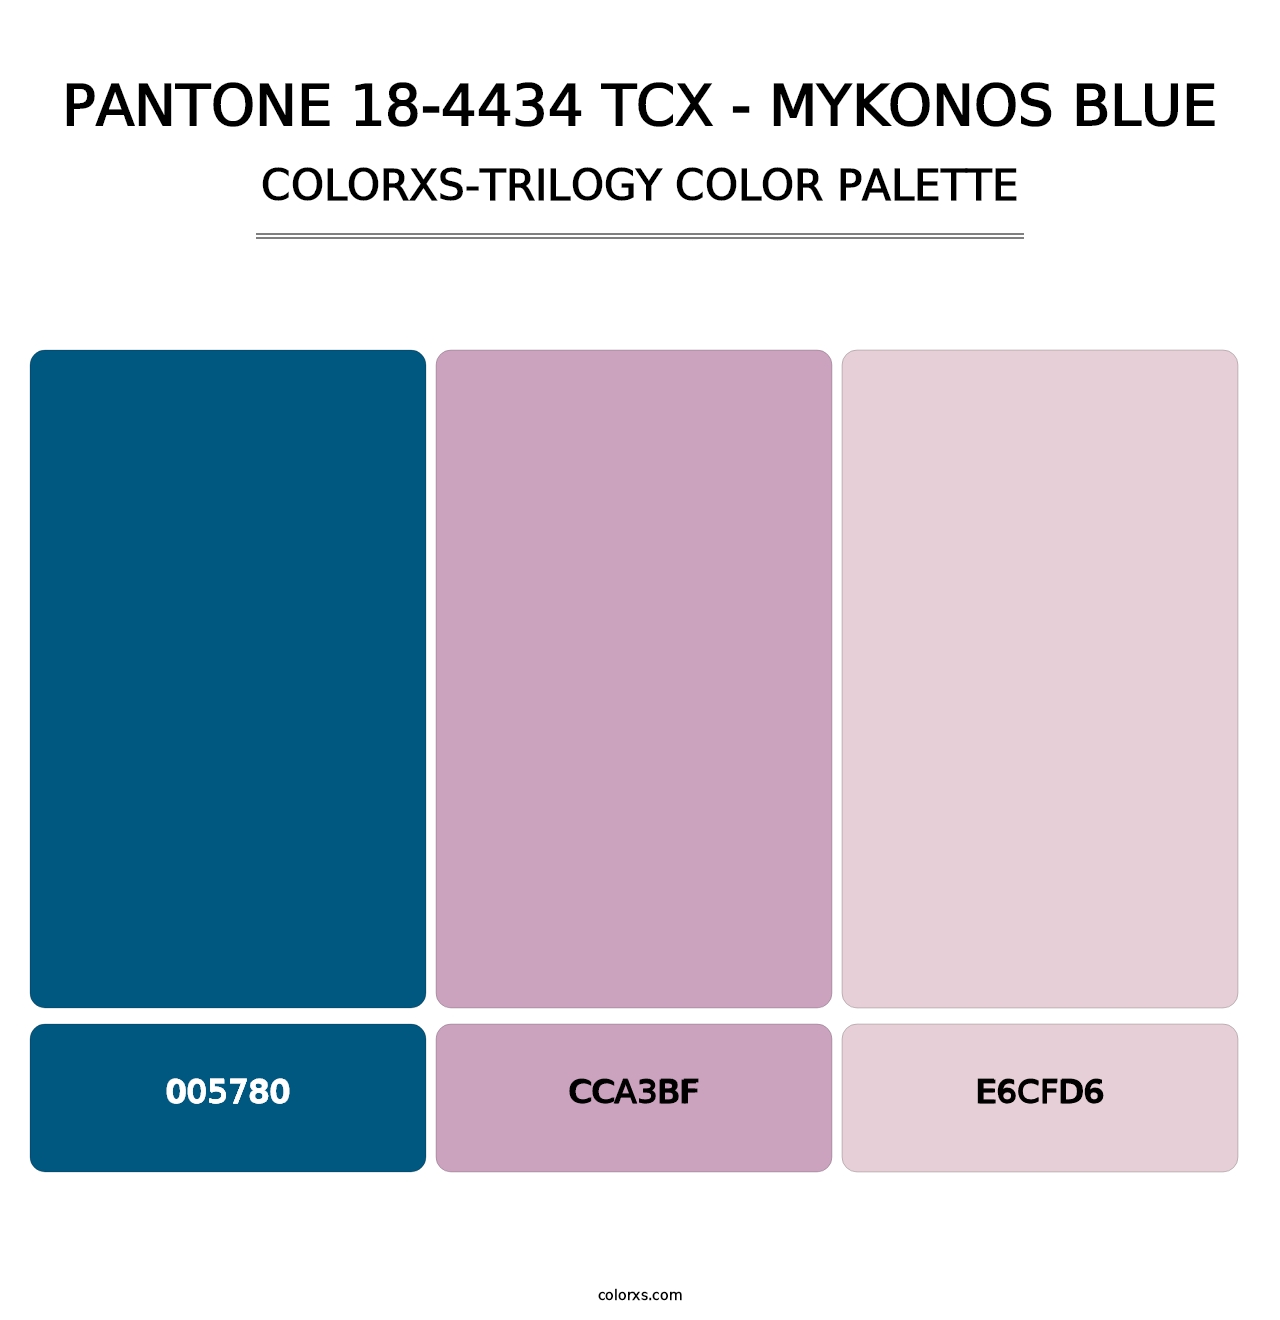 PANTONE 18-4434 TCX - Mykonos Blue - Colorxs Trilogy Palette